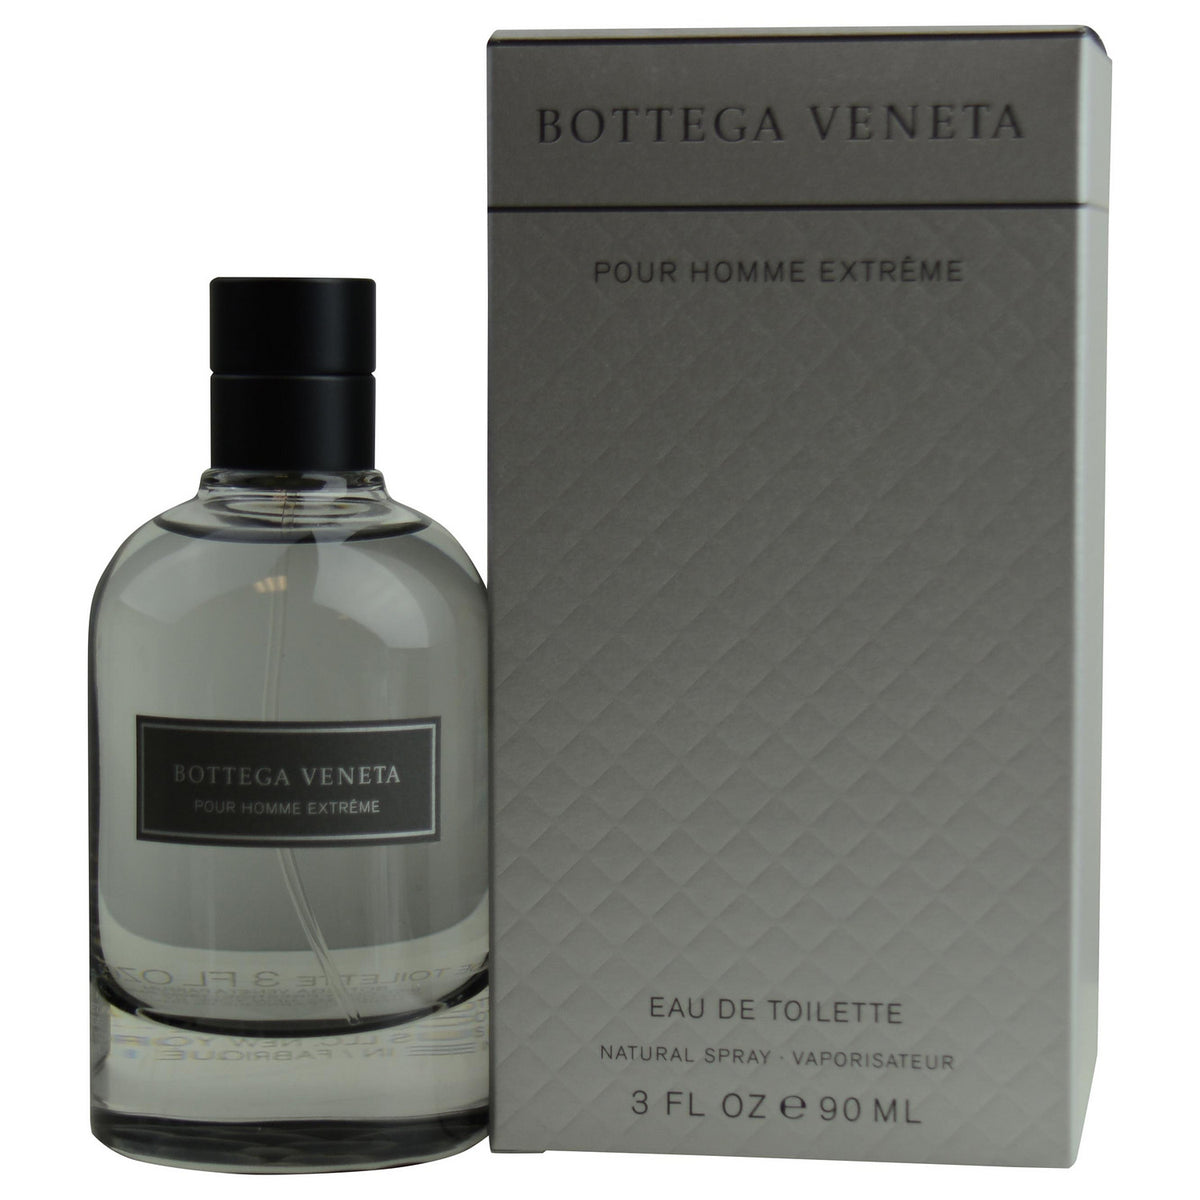 Pour Homme Extreme by Atomizer Sampler Size de Veneta Samples Scent Perfume Travel Eau and | Toilette | Fragrance DecantX Bottega